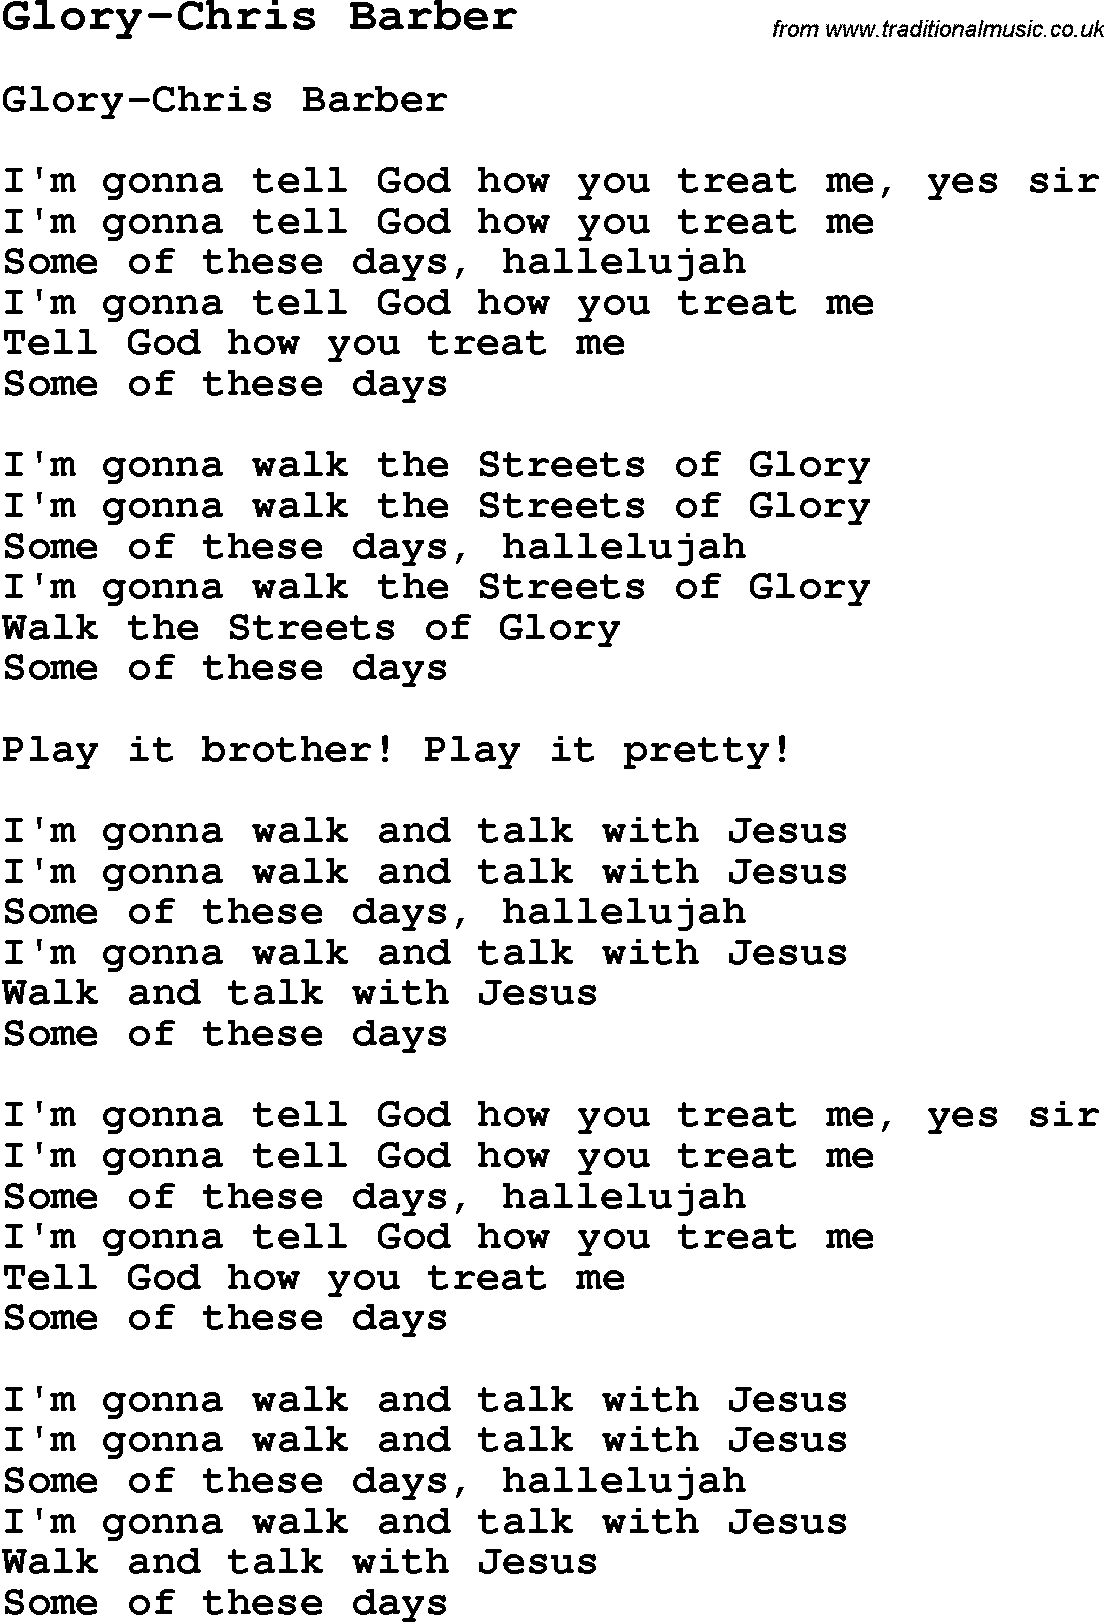 Skiffle Song Lyrics for Glory-Chris Barber.